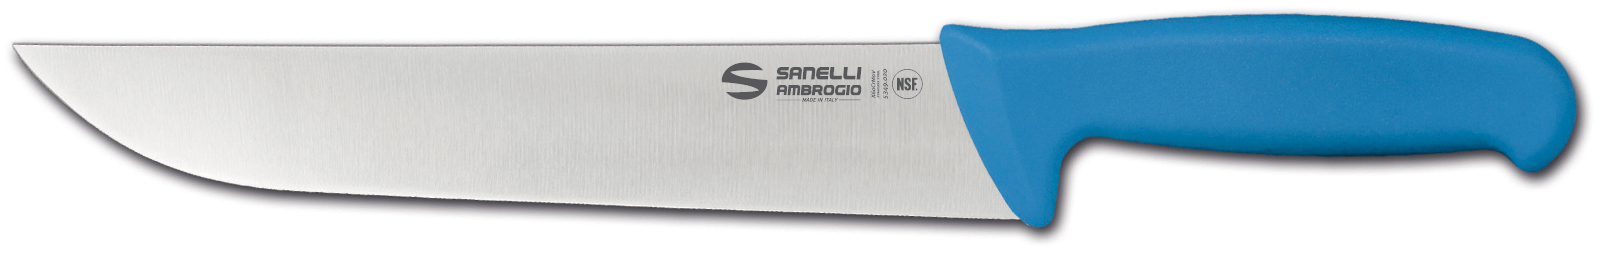 S309.024L SUPRA BUTCHER KNIFE BLUE HANDLE 24CM LAMA SANELLI AMBROGIO